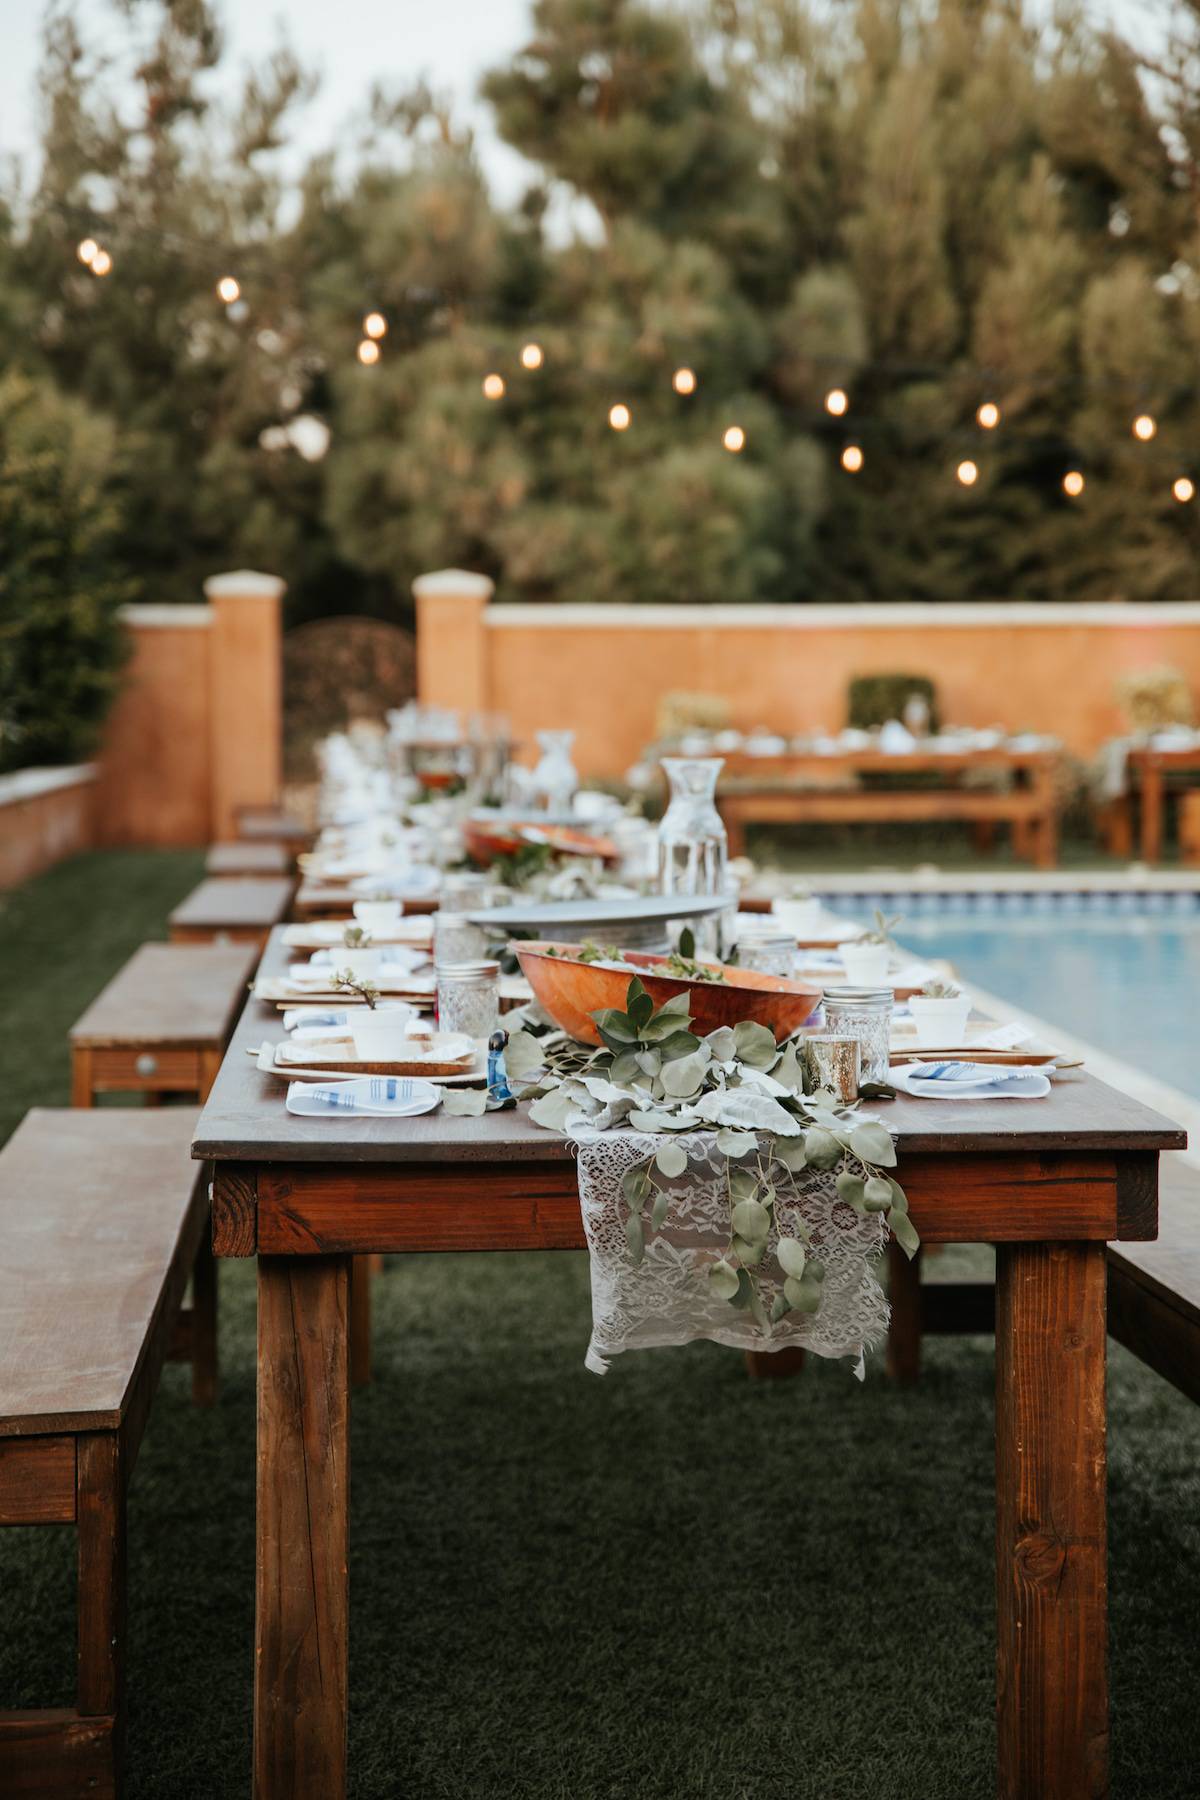 Backyard wedding setting - wooden tables with bohemian decor around swimming pool.